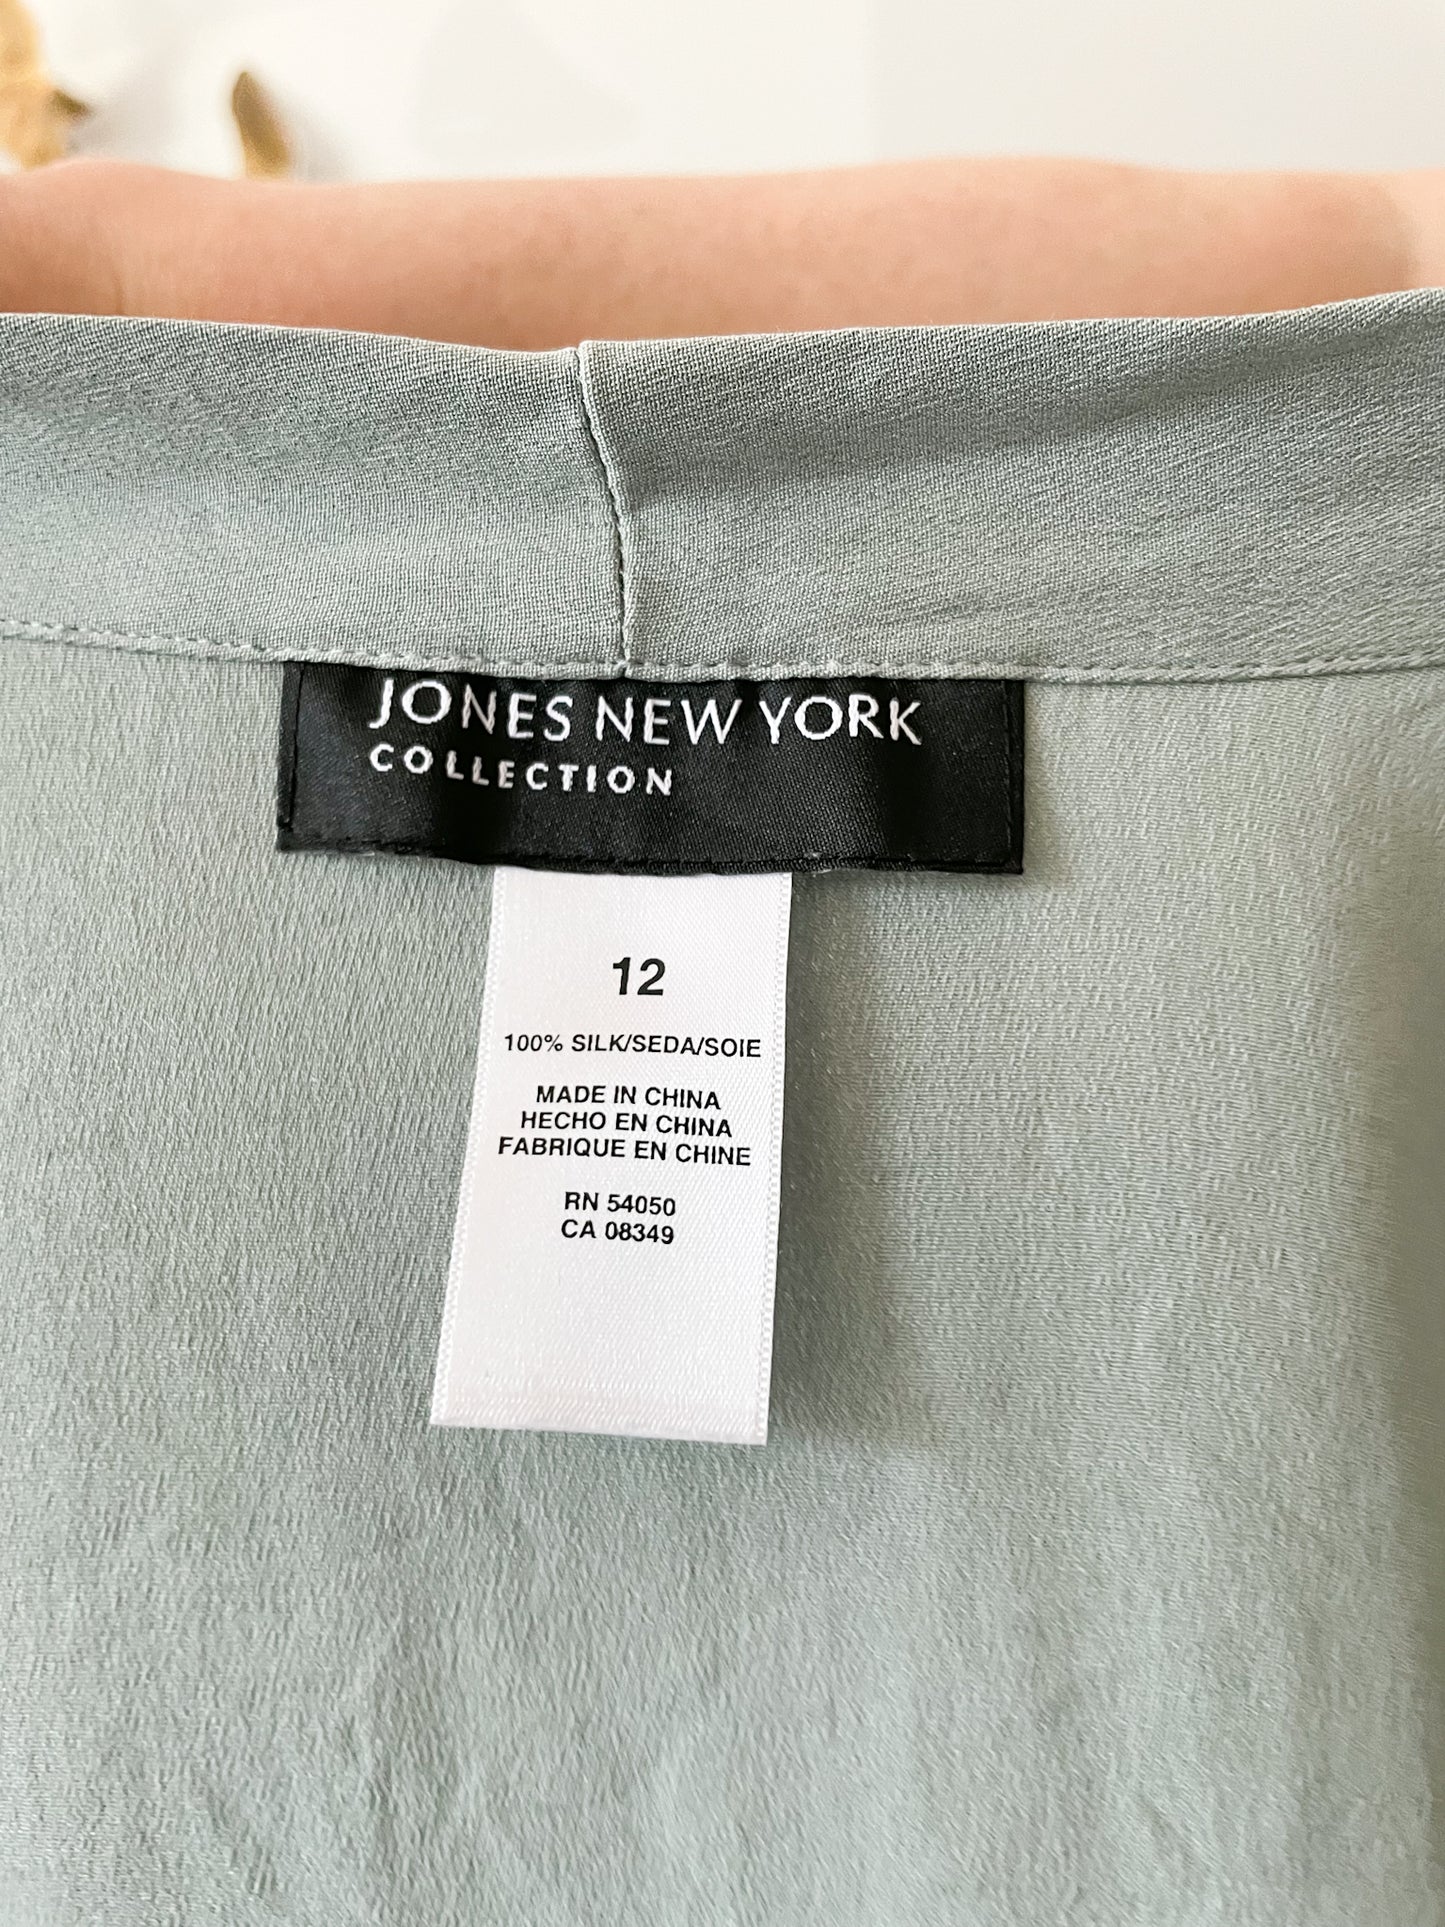 Jones New York Sage Green 100% Silk Button Down Pussybow Top - Medium